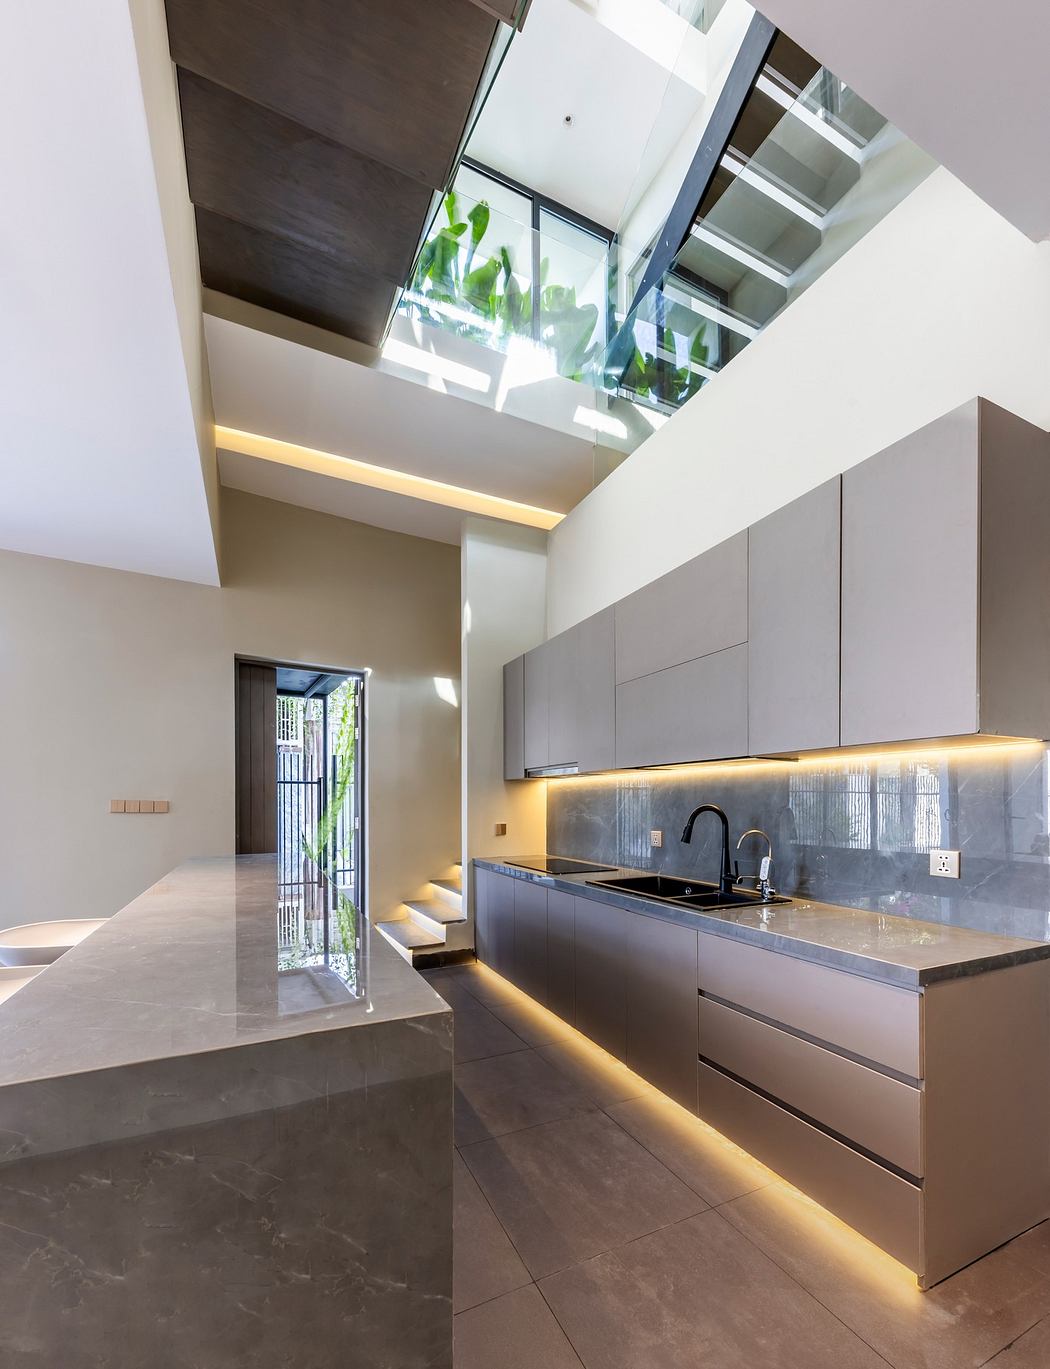 Modern kitchen interior with skylight and minimalist cabinets.